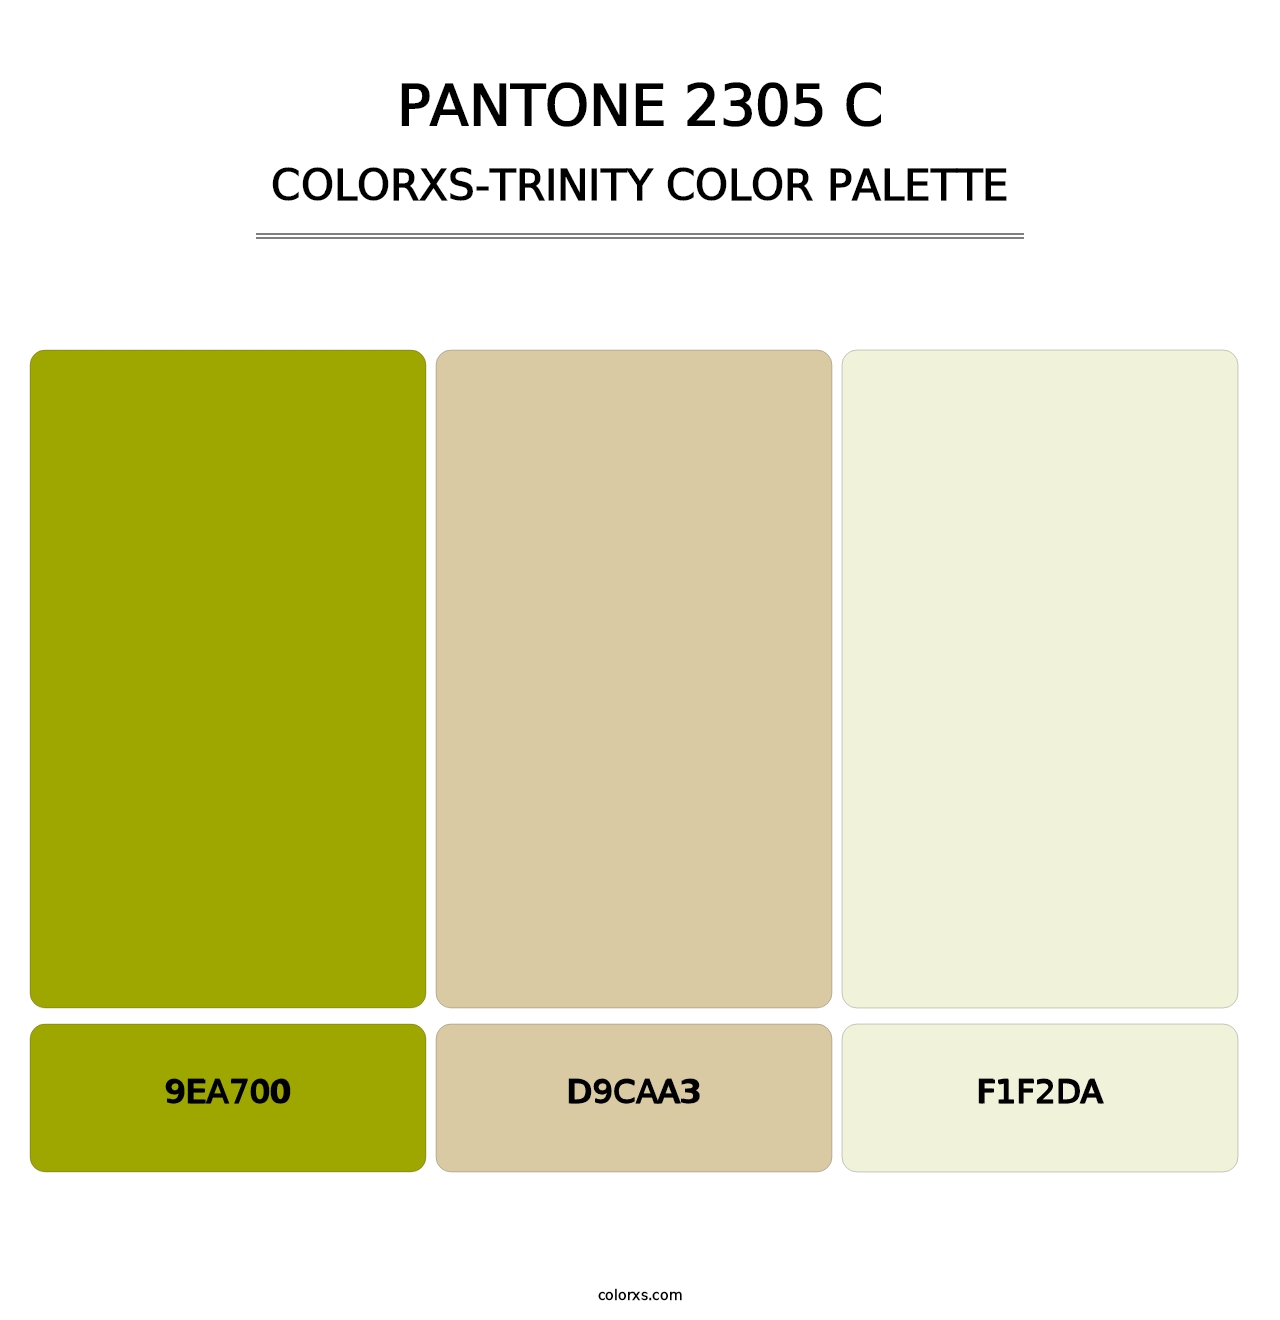 PANTONE 2305 C - Colorxs Trinity Palette